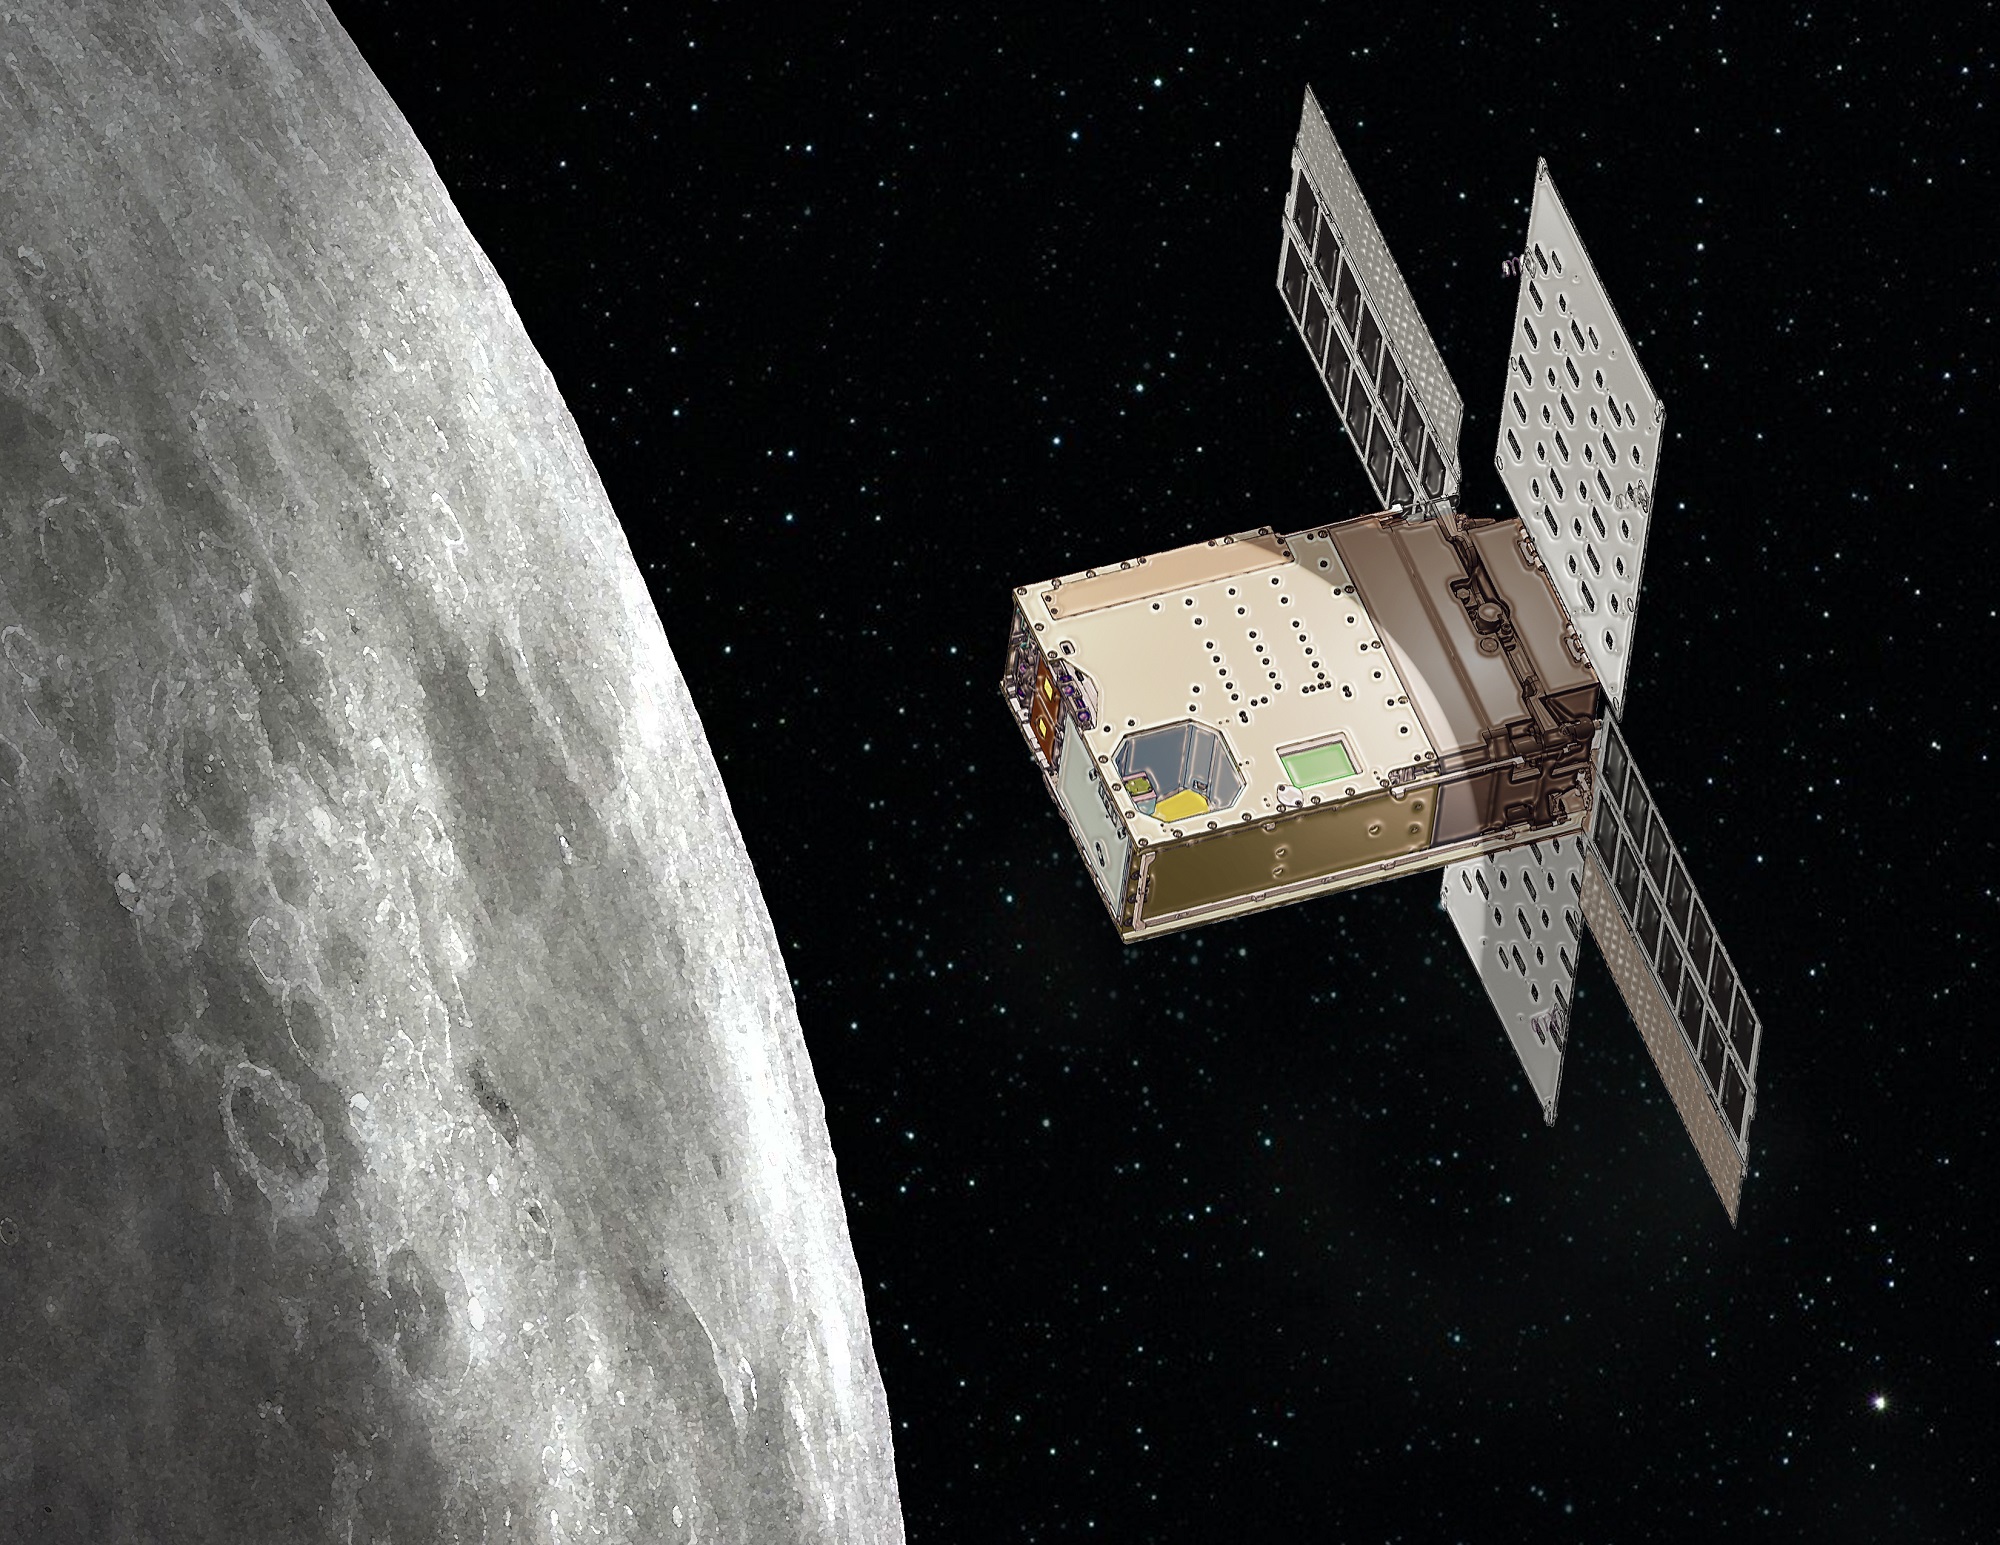 e lunar flashlight wo laser dec2019 - فضاپیمایی به اندازه یک کیف دستی در جستجوی یخ بر روی کره ماه